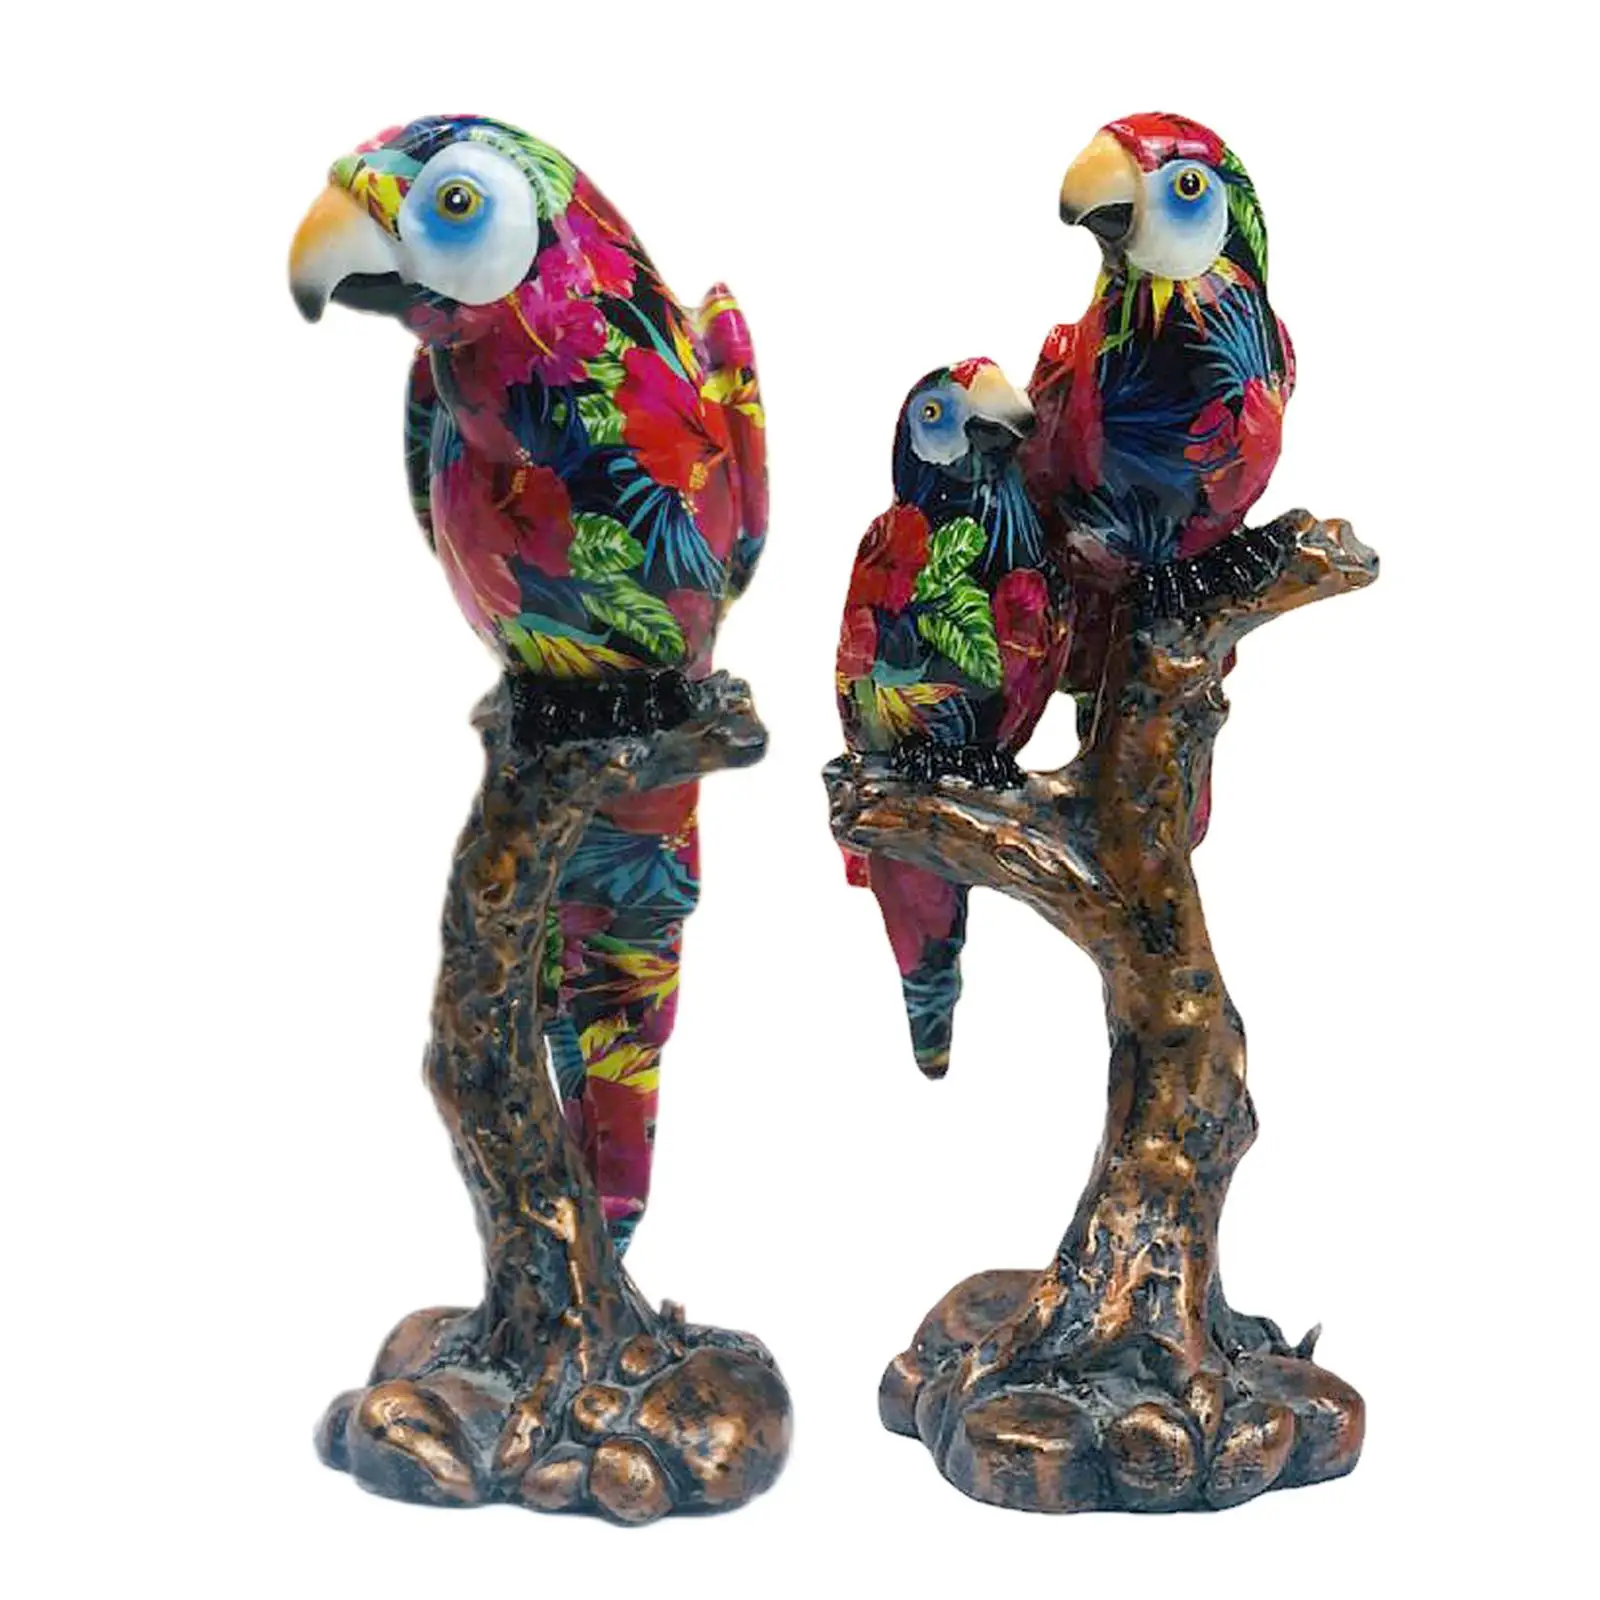 Modern Graffiti Parrot Statue Colorful Resin Art Animal Figurine for Shelf TV Cabinet Table Centerpiece Desktop Decoration